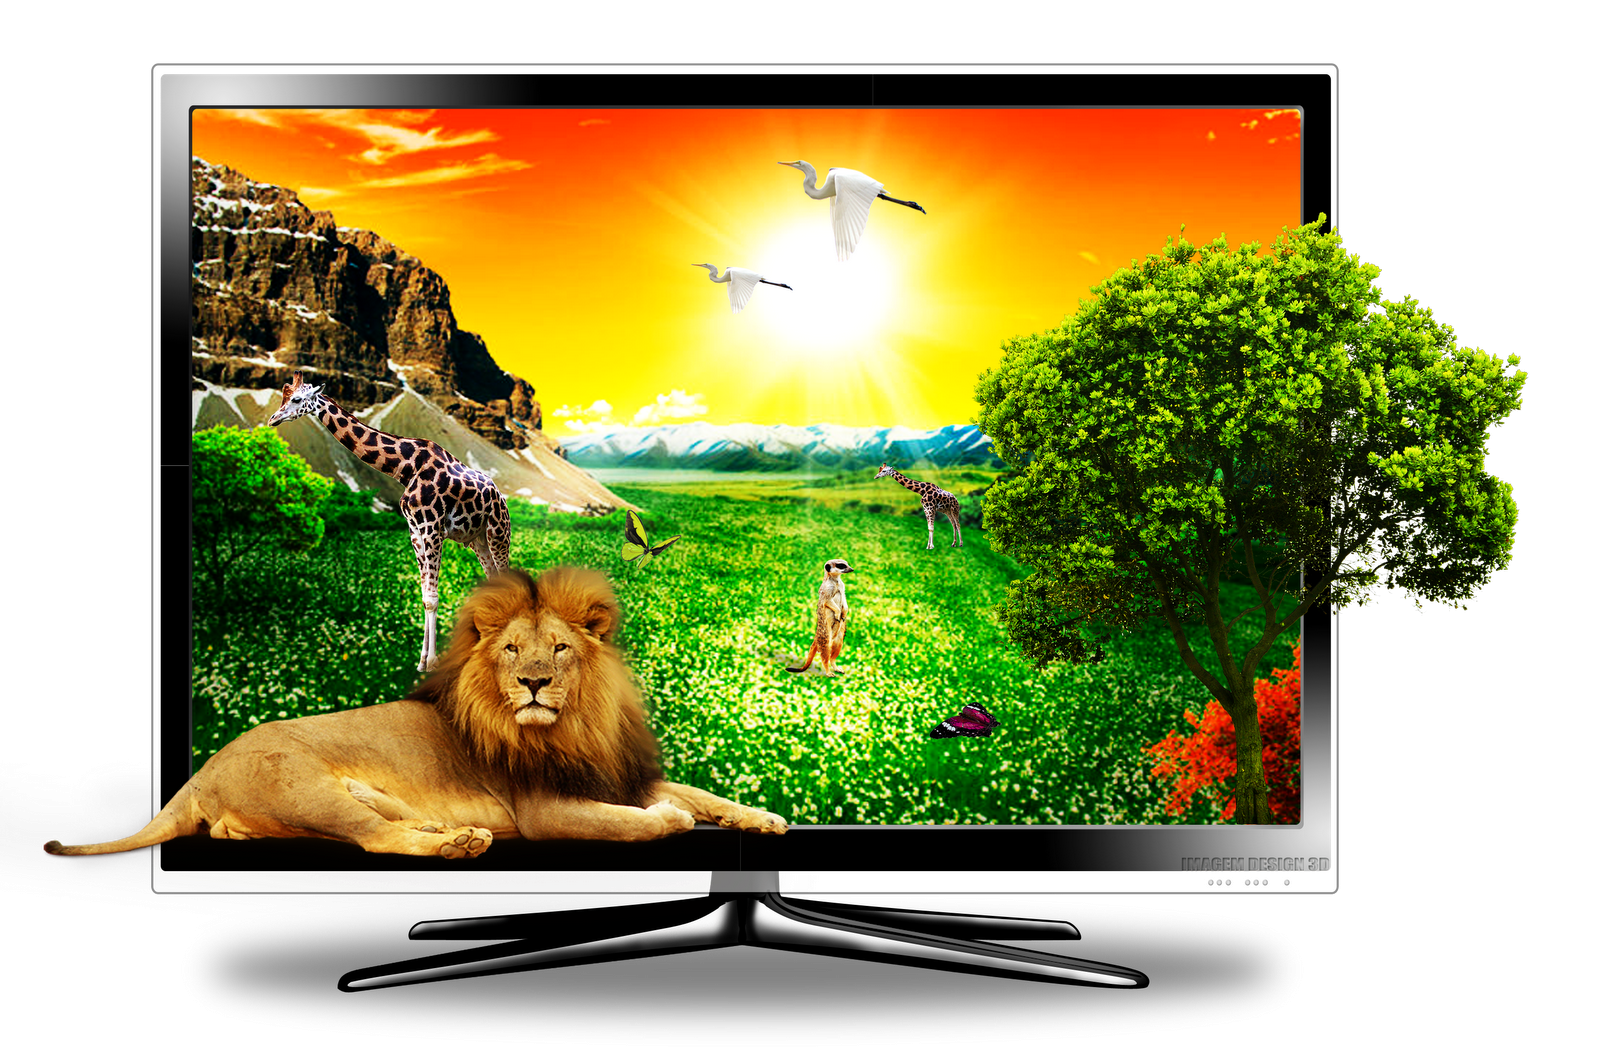 Т д тв. Телевизор. Реклама телевизора LG. 3д телевизор. Телевизор картинка.